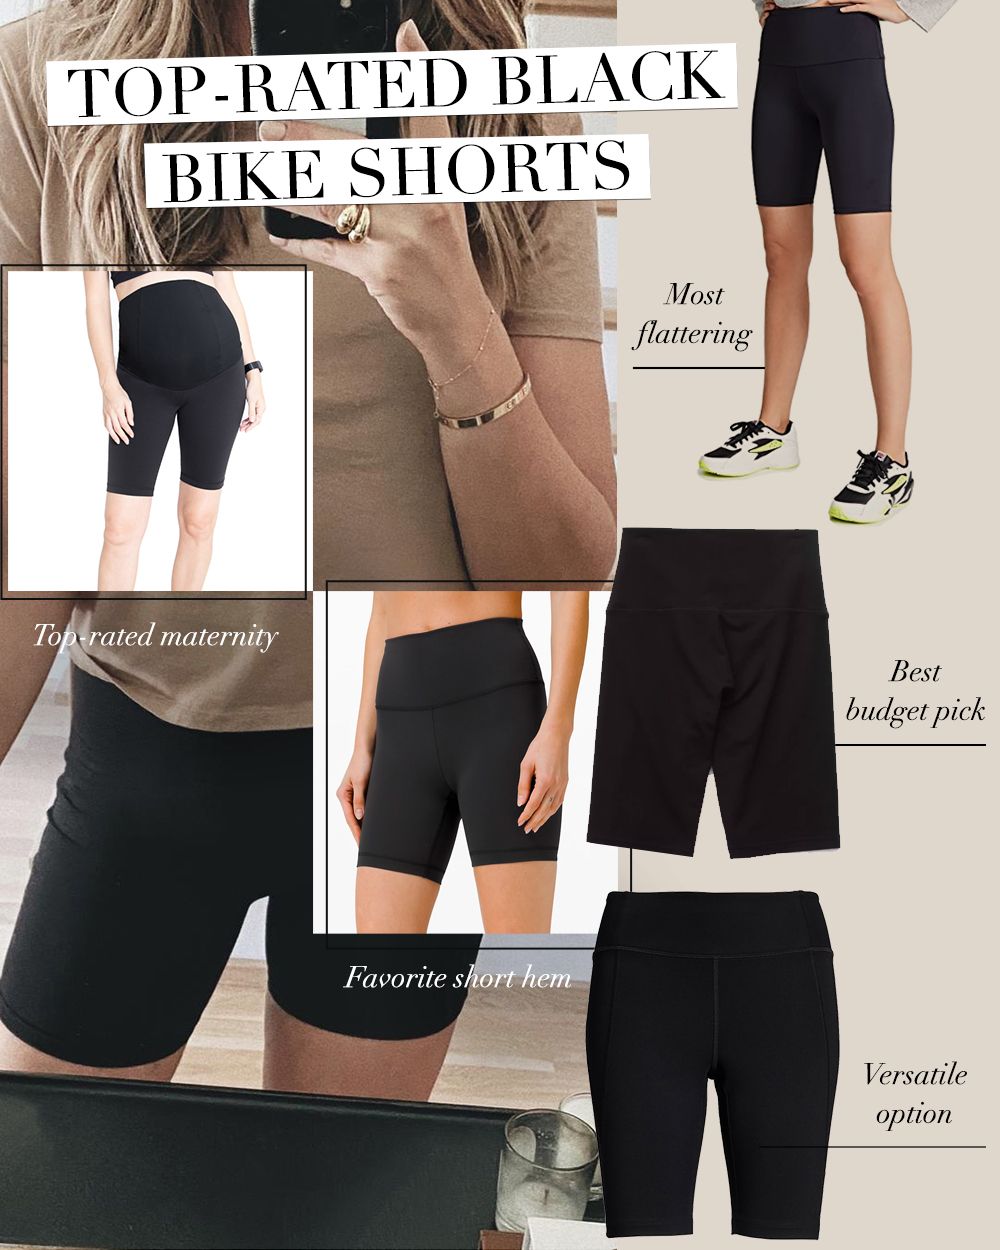 Top-Rated Black Bike Shorts  The Teacher Diva: a Dallas Fashion